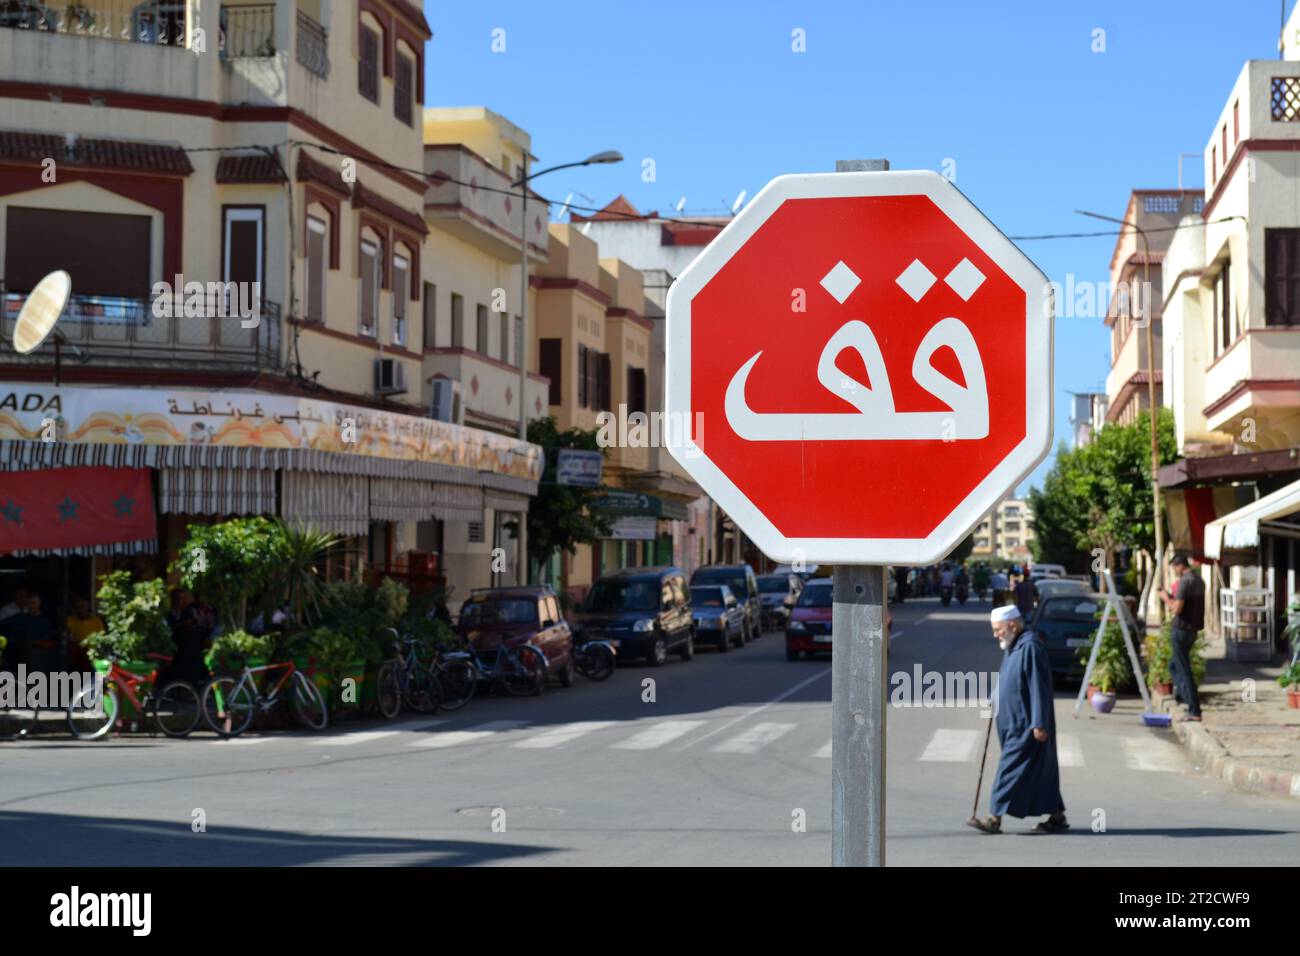 EL KSAR EL KEBIR, MAROC - 10 NOVEMBRE 2015 : panneau de signalisation ARRET arabe avec un vieil homme en arrière-plan dans la ville marocaine d'El Ksar El Kebir. Banque D'Images